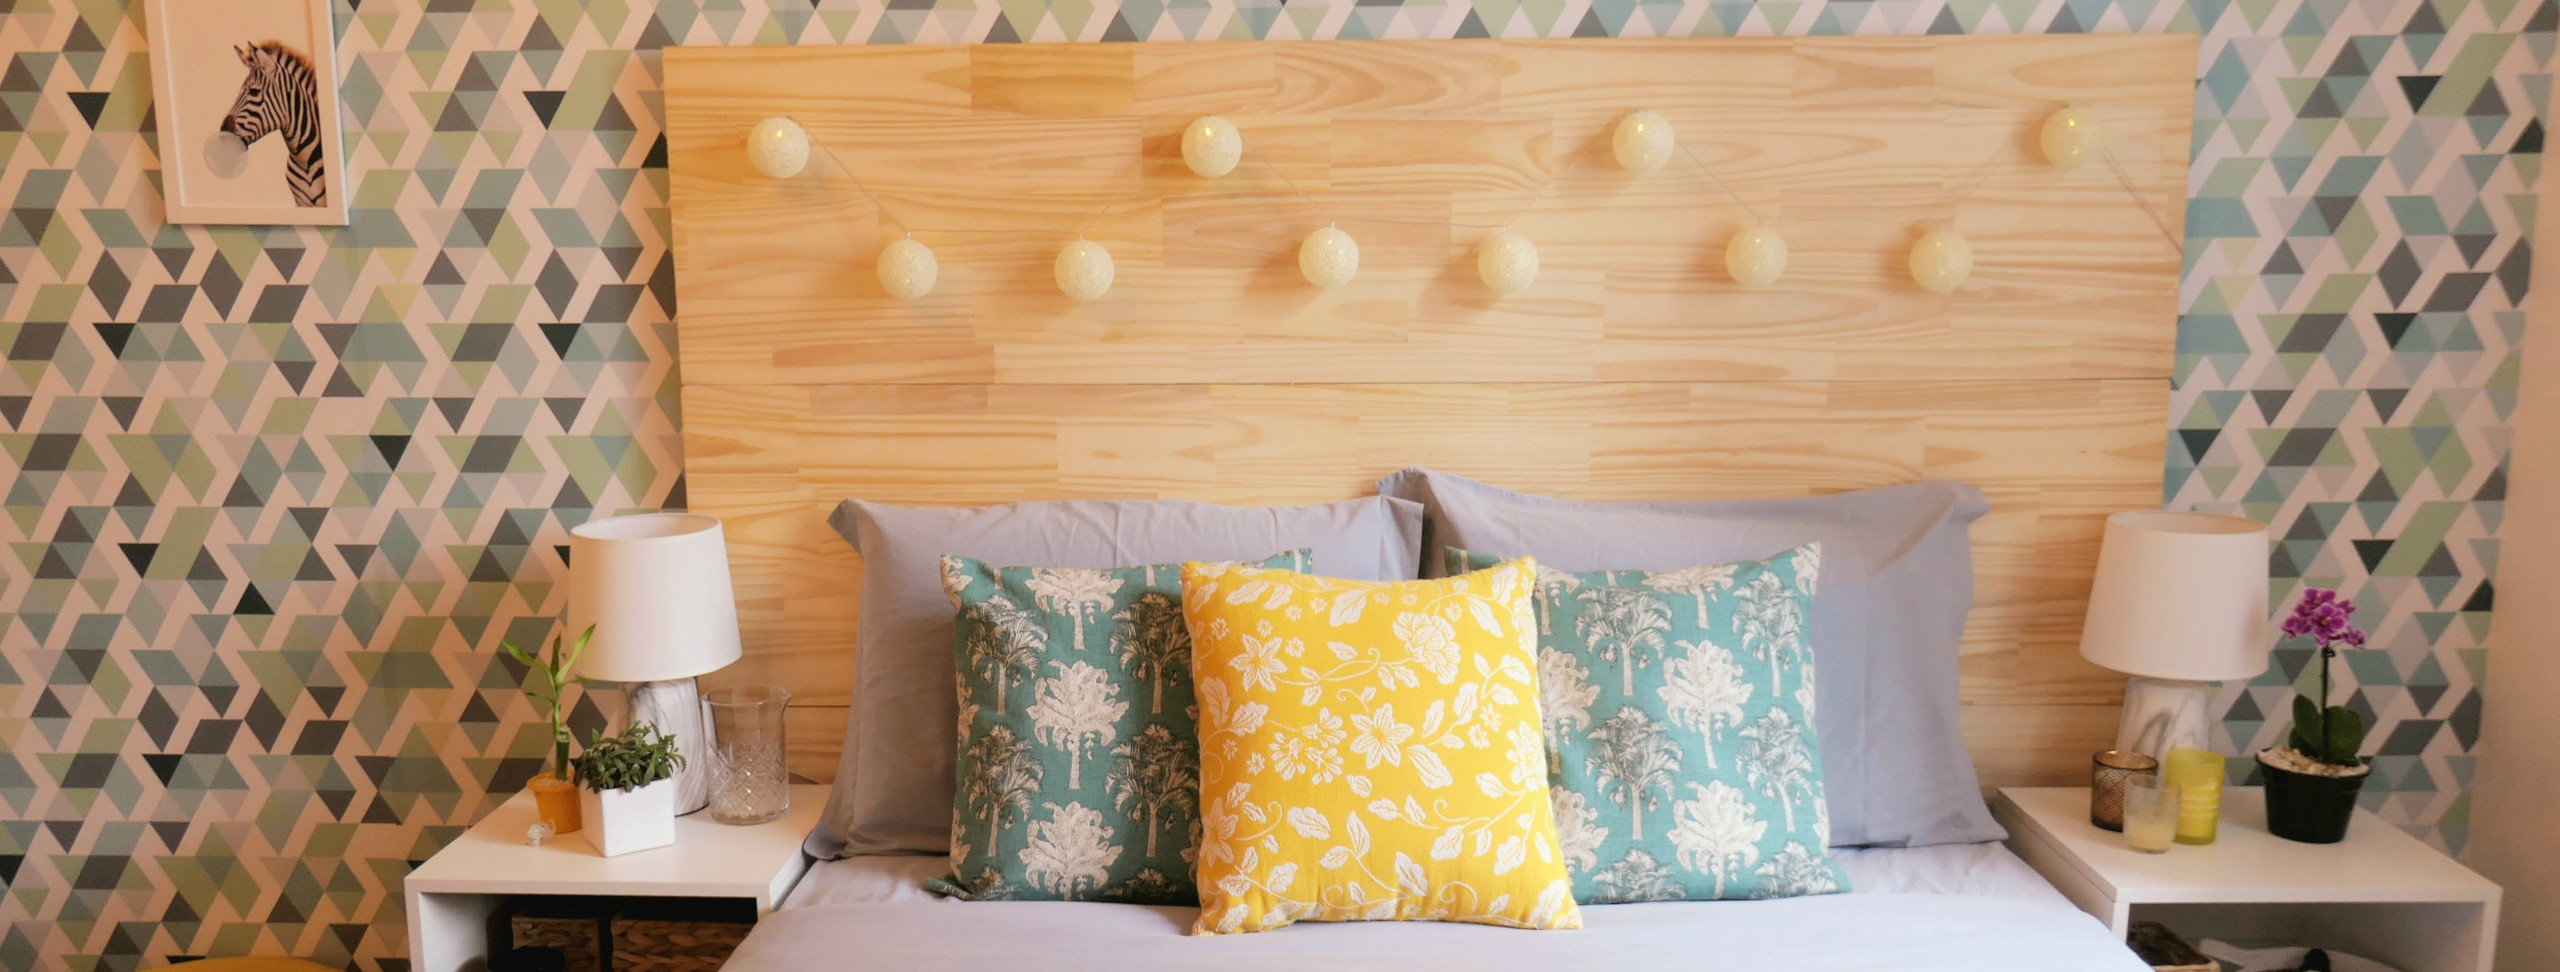 casa-decoracao-itens-cores-decorativos-decorar-personalizar-decor-quarto-cama-amarelo-cobertas-lampada-abajur-luminaria-papel-parede